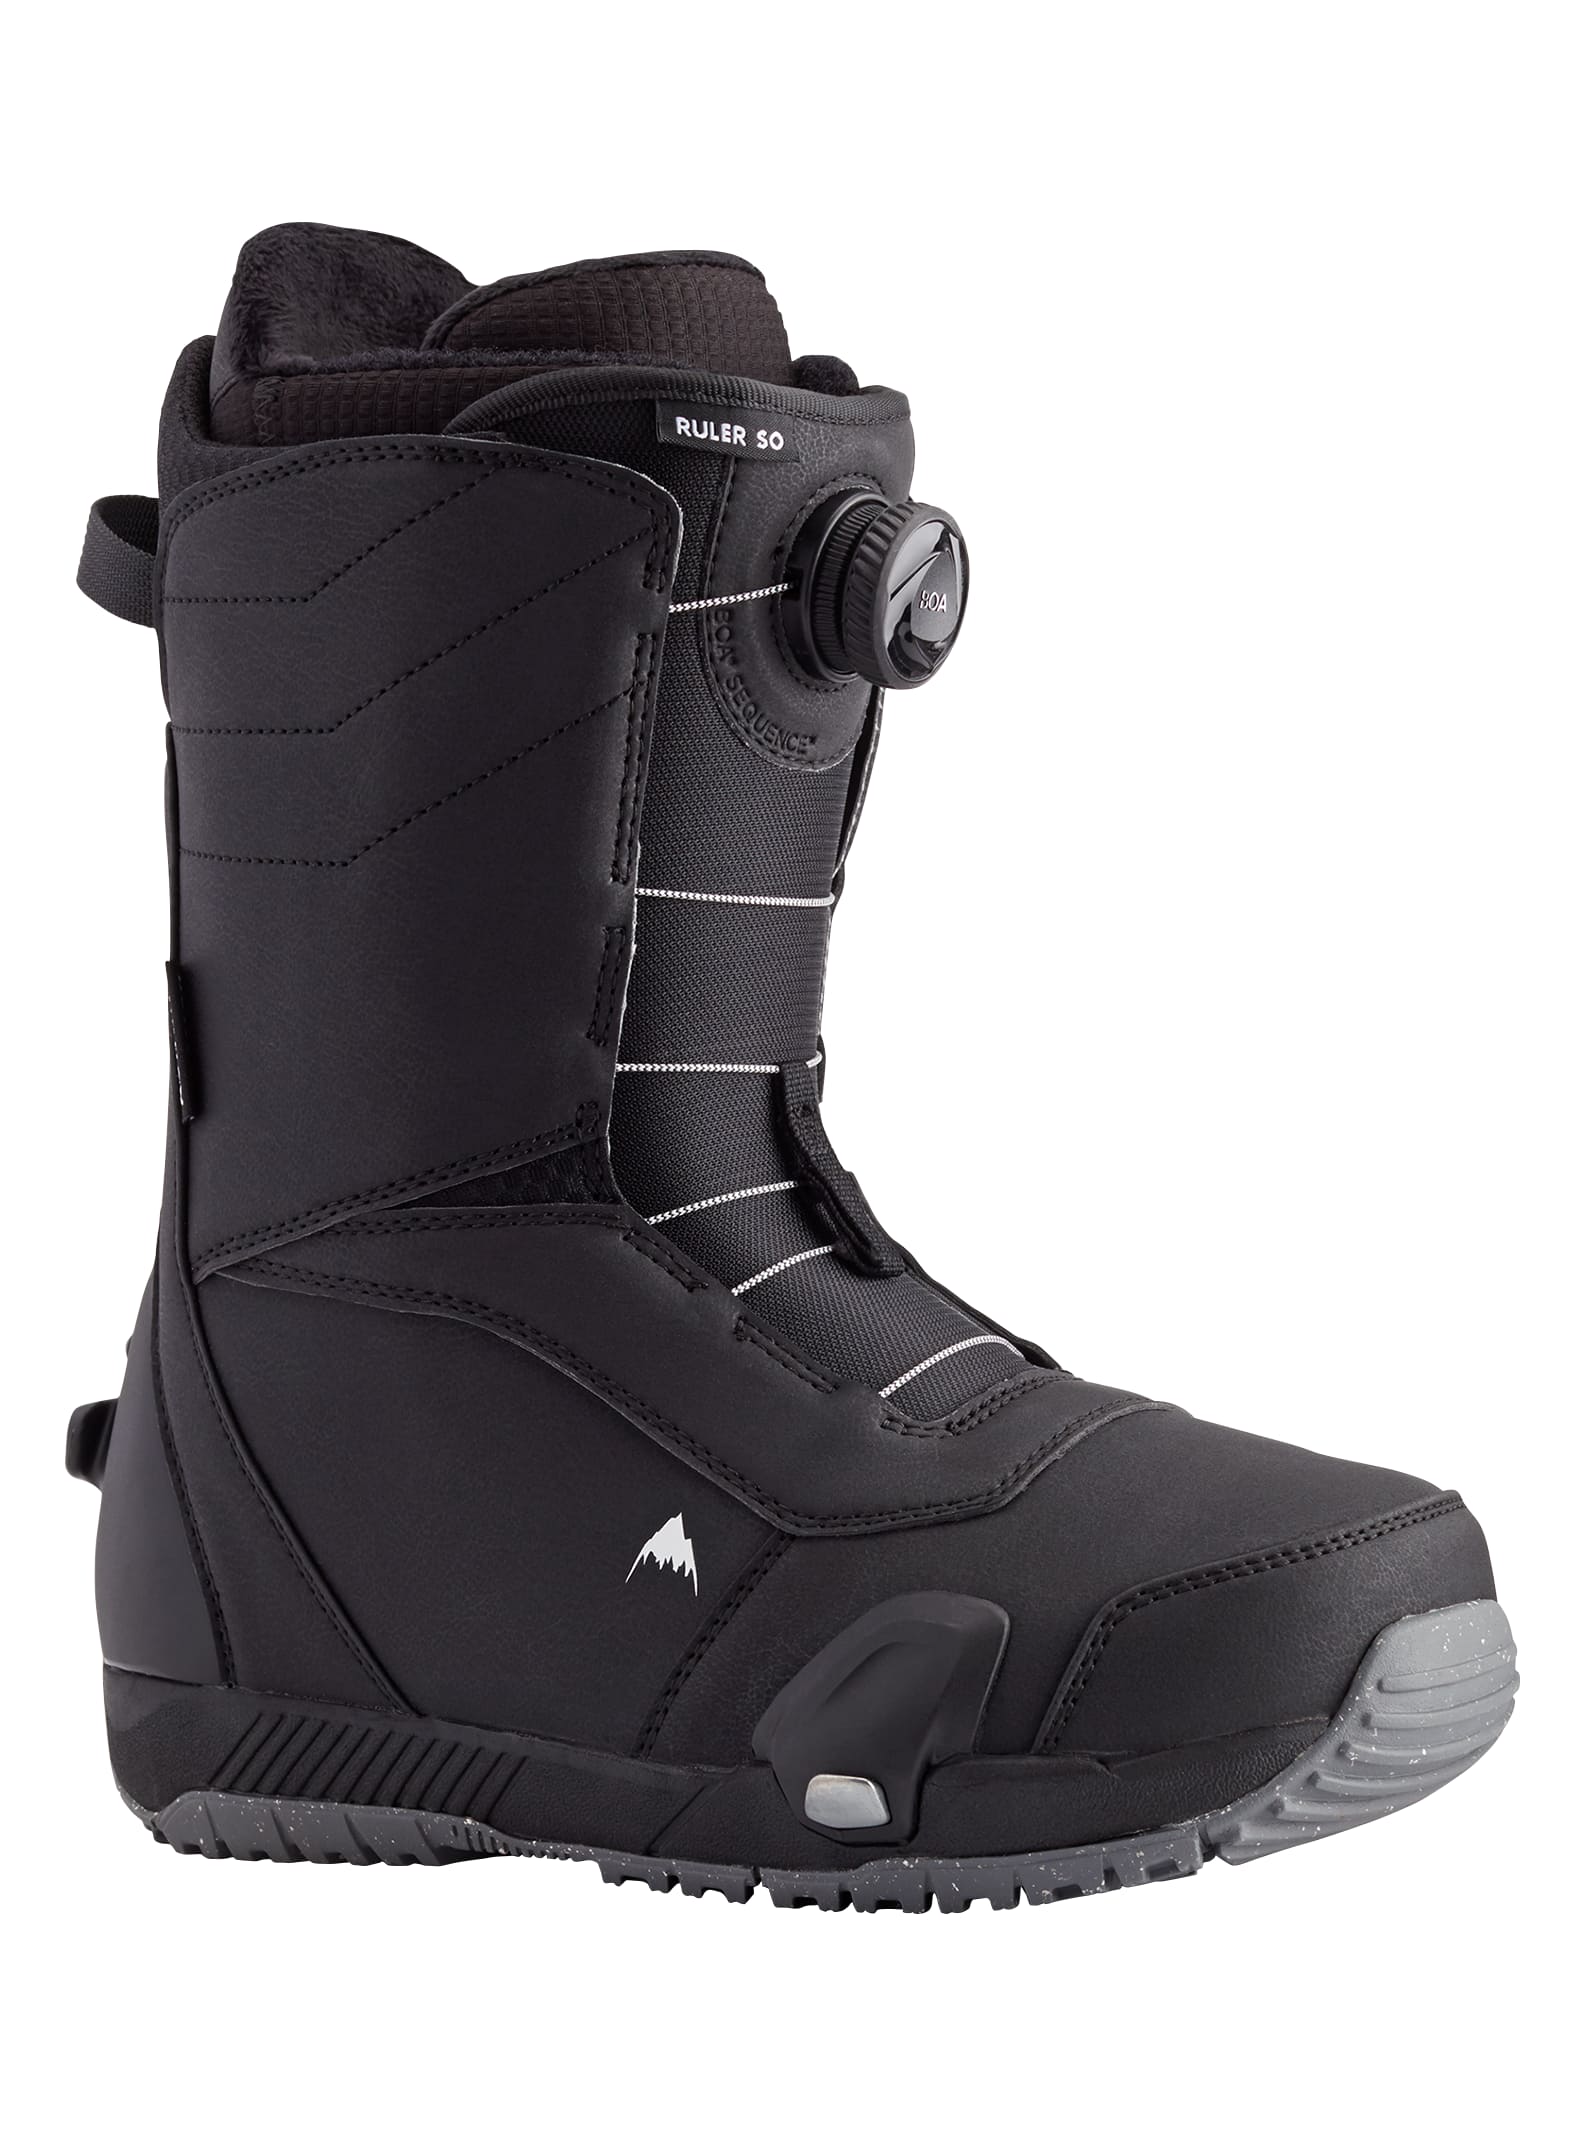 Burton Step On® Bindings & Boots for Men, Women & Kids | Burton Snowboards  US